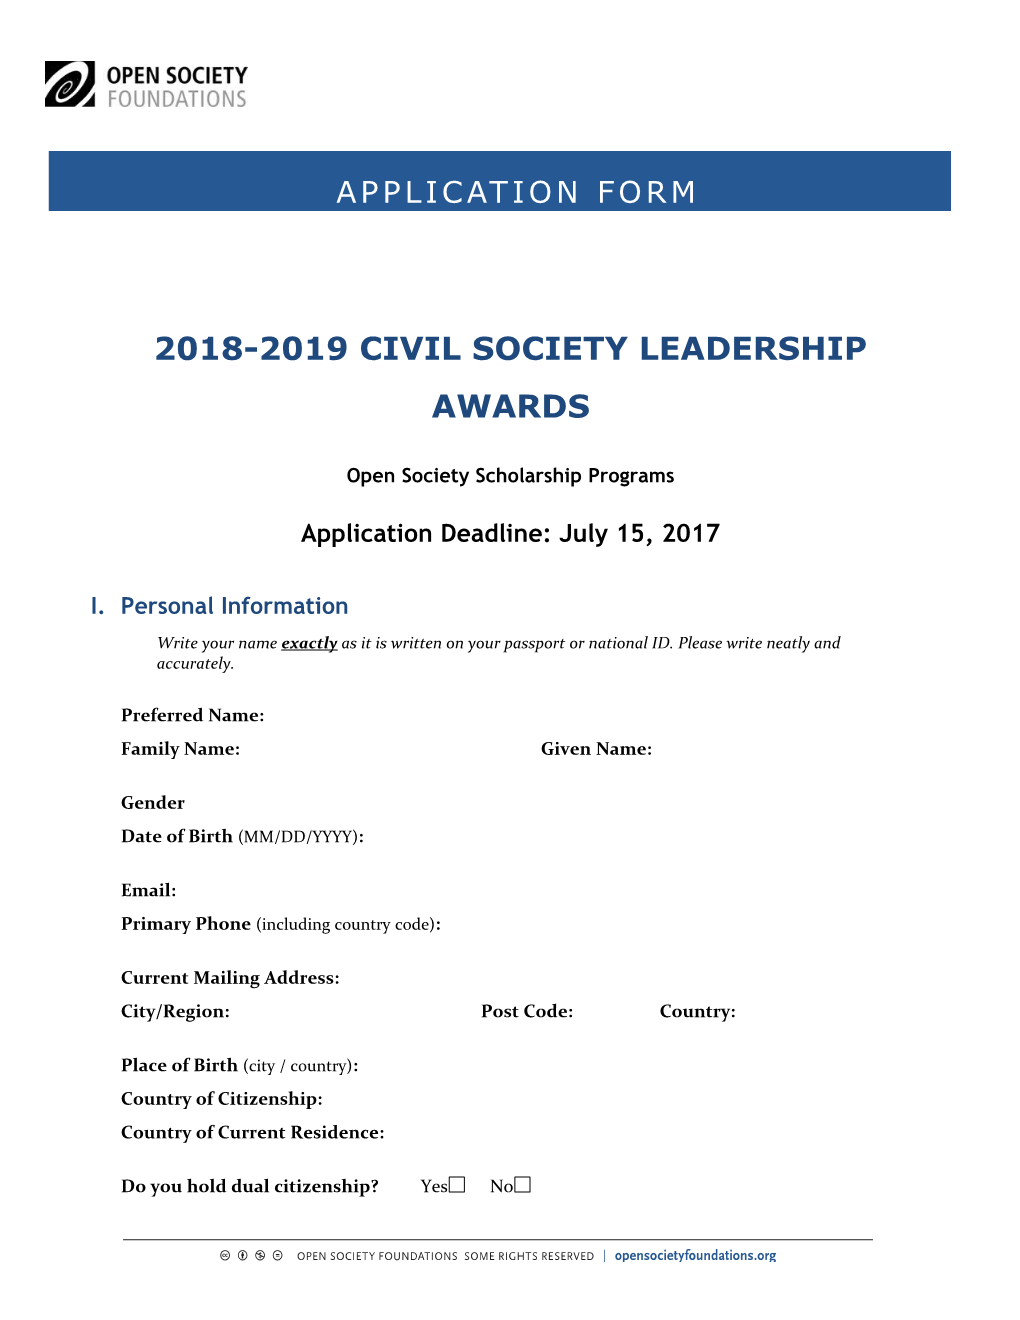 2018-2019 Civil Society Leadership Awards